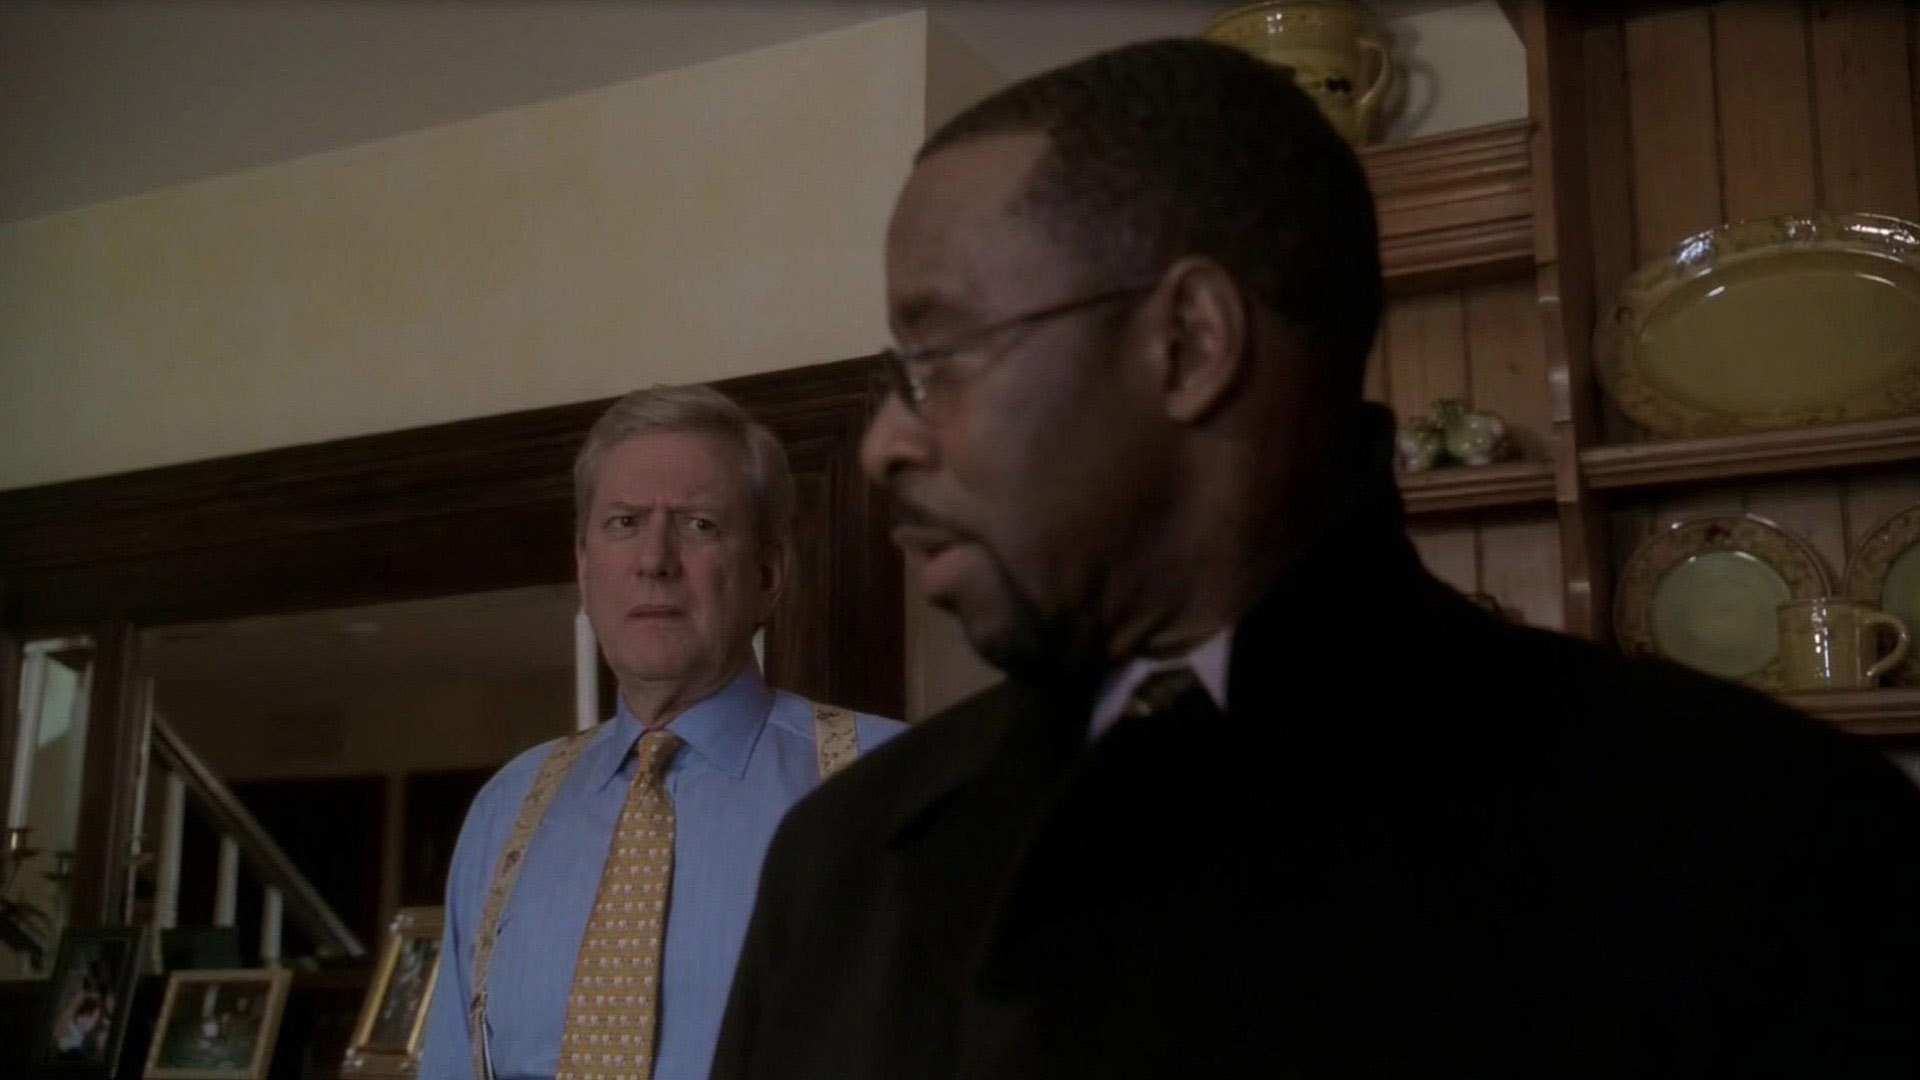 Law & Order: Criminal Intent Season 1 Episode 15 - Semi-Professional